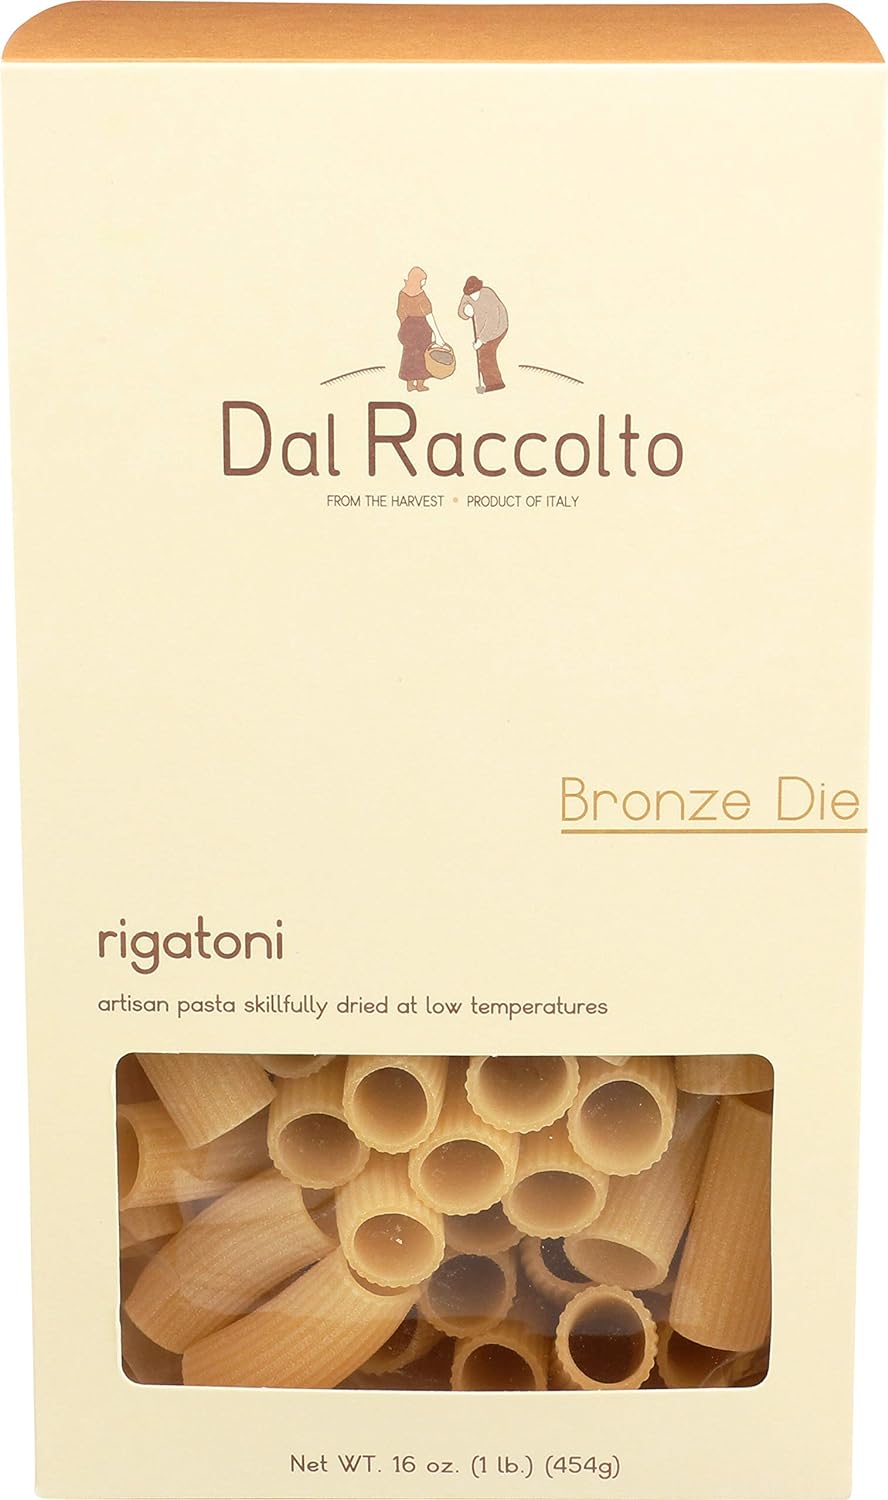 Dal Raccolto Bronze Die Pasta - Rigatoni, 1 lb Box : Coffee Substitutes : Grocery & Gourmet Food